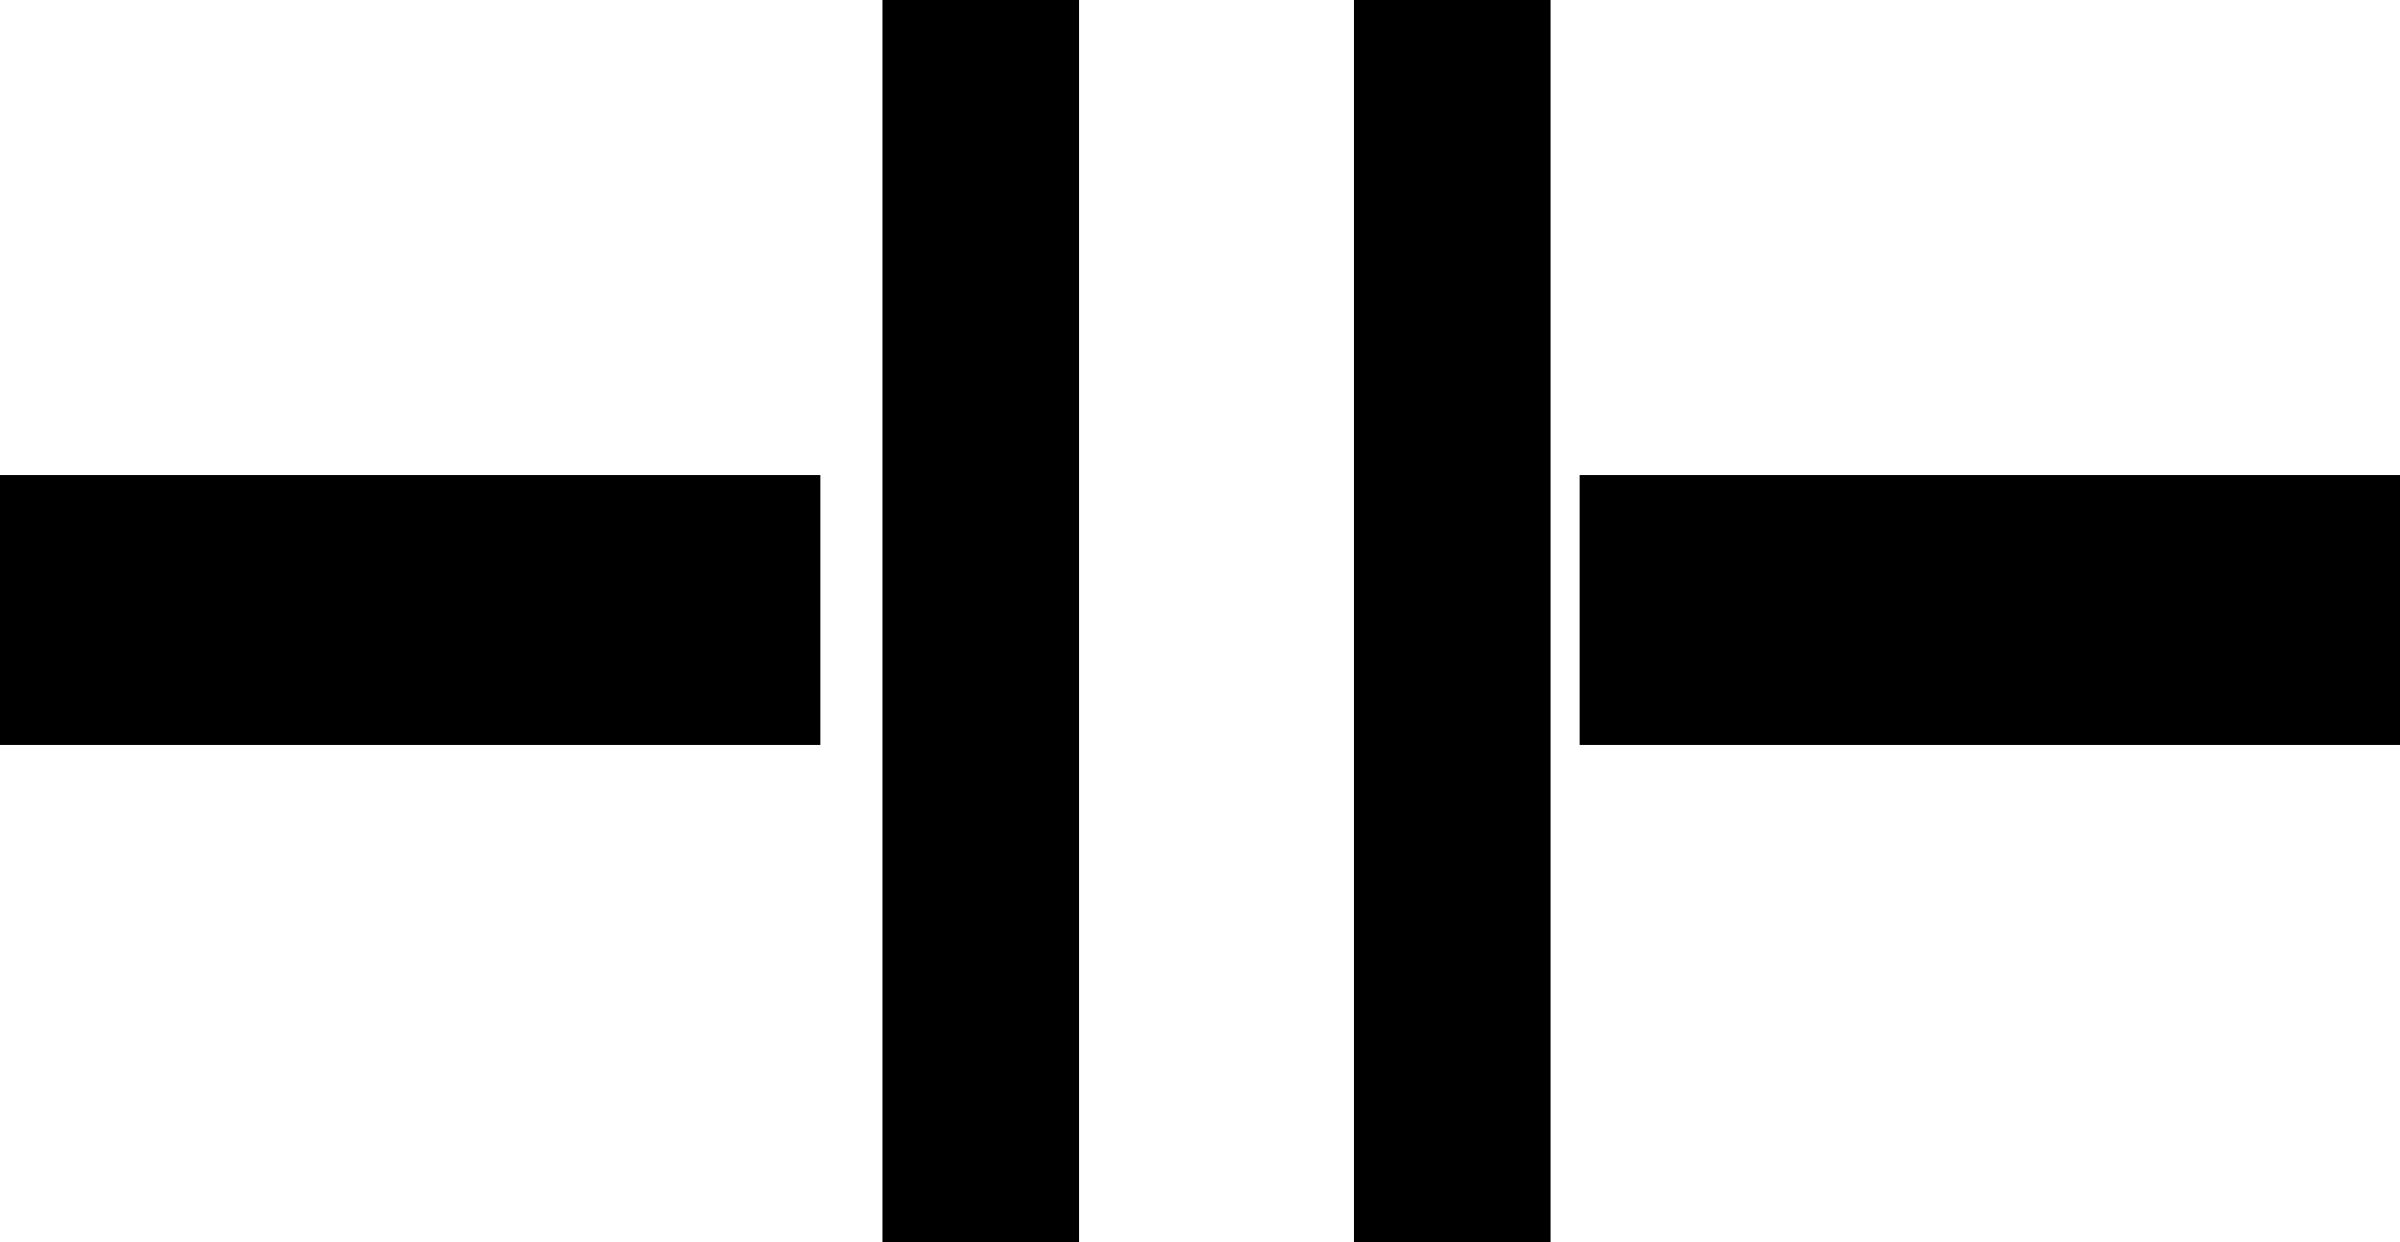 Clipart - Capacitor symbol image